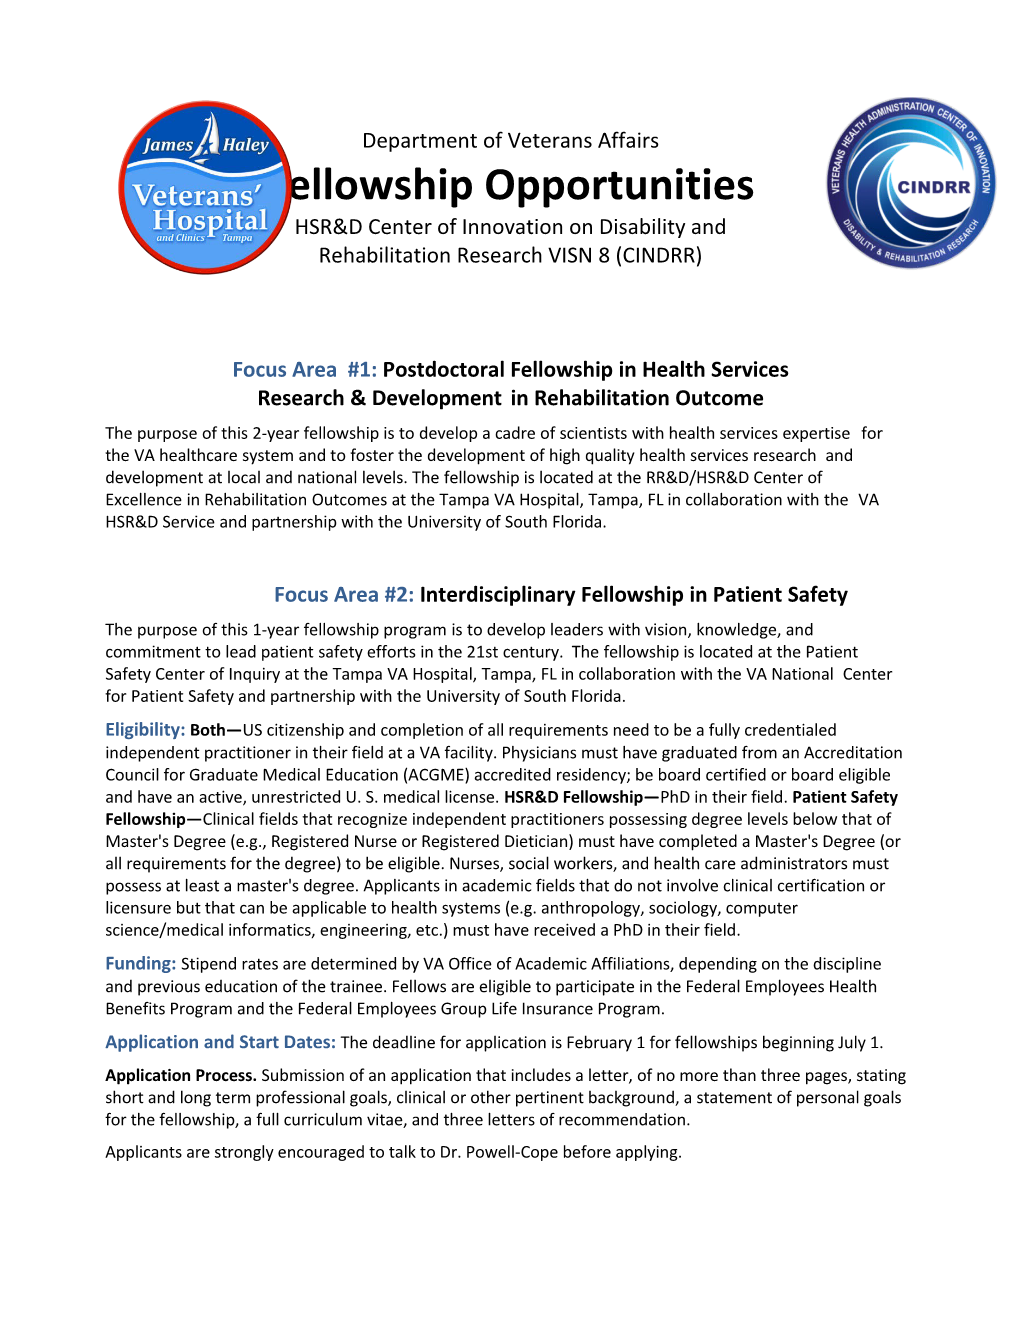 Postdoctoral Fellowship Opportunities